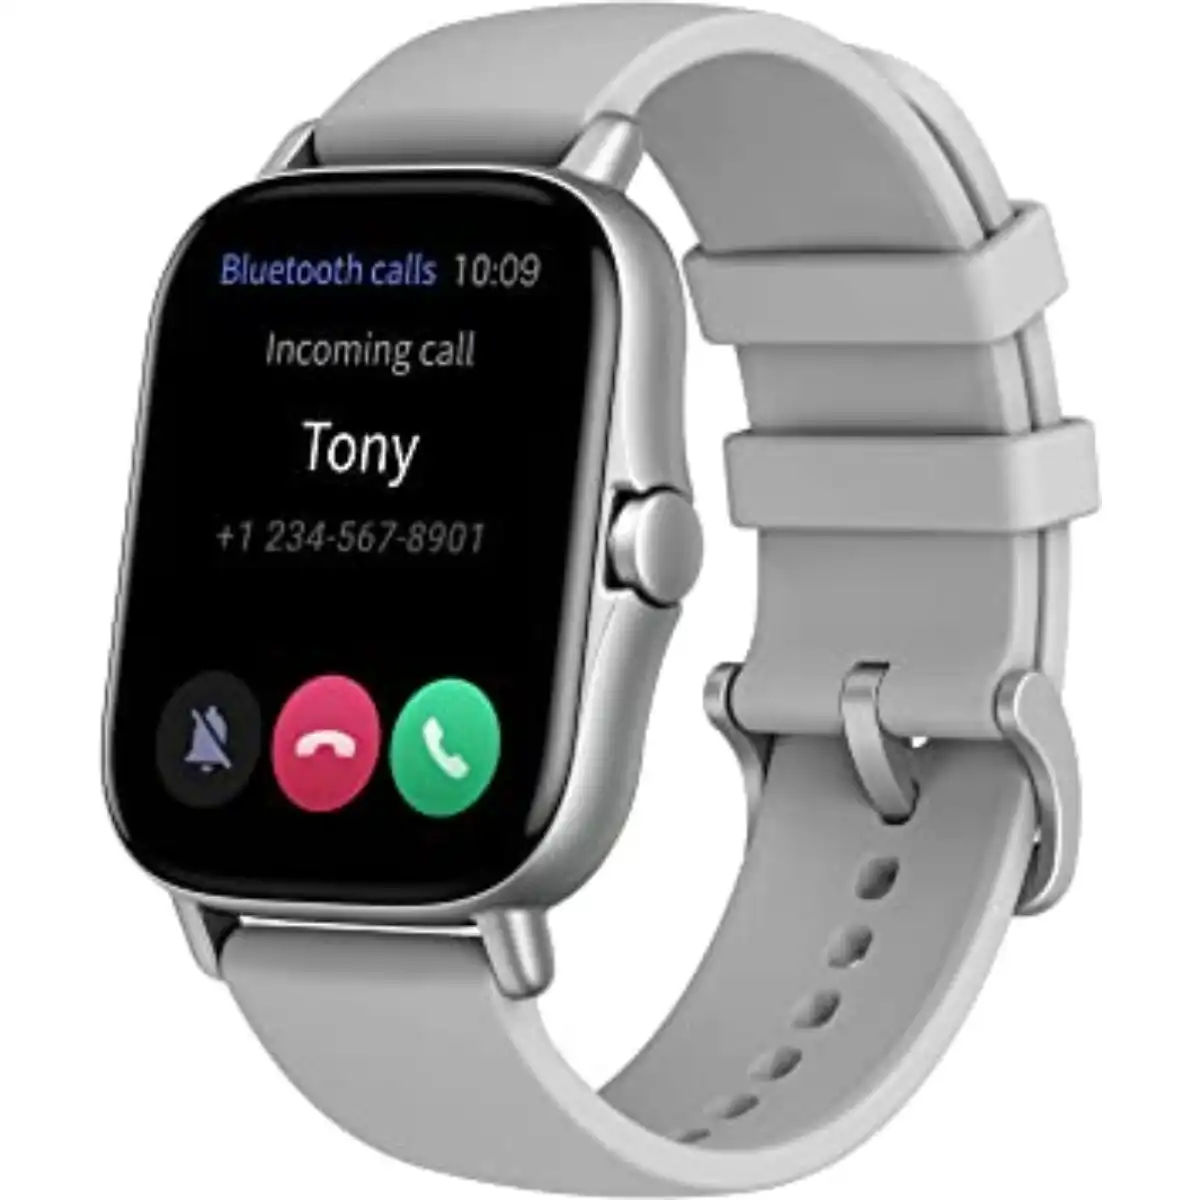 Apple watch dupe amazon